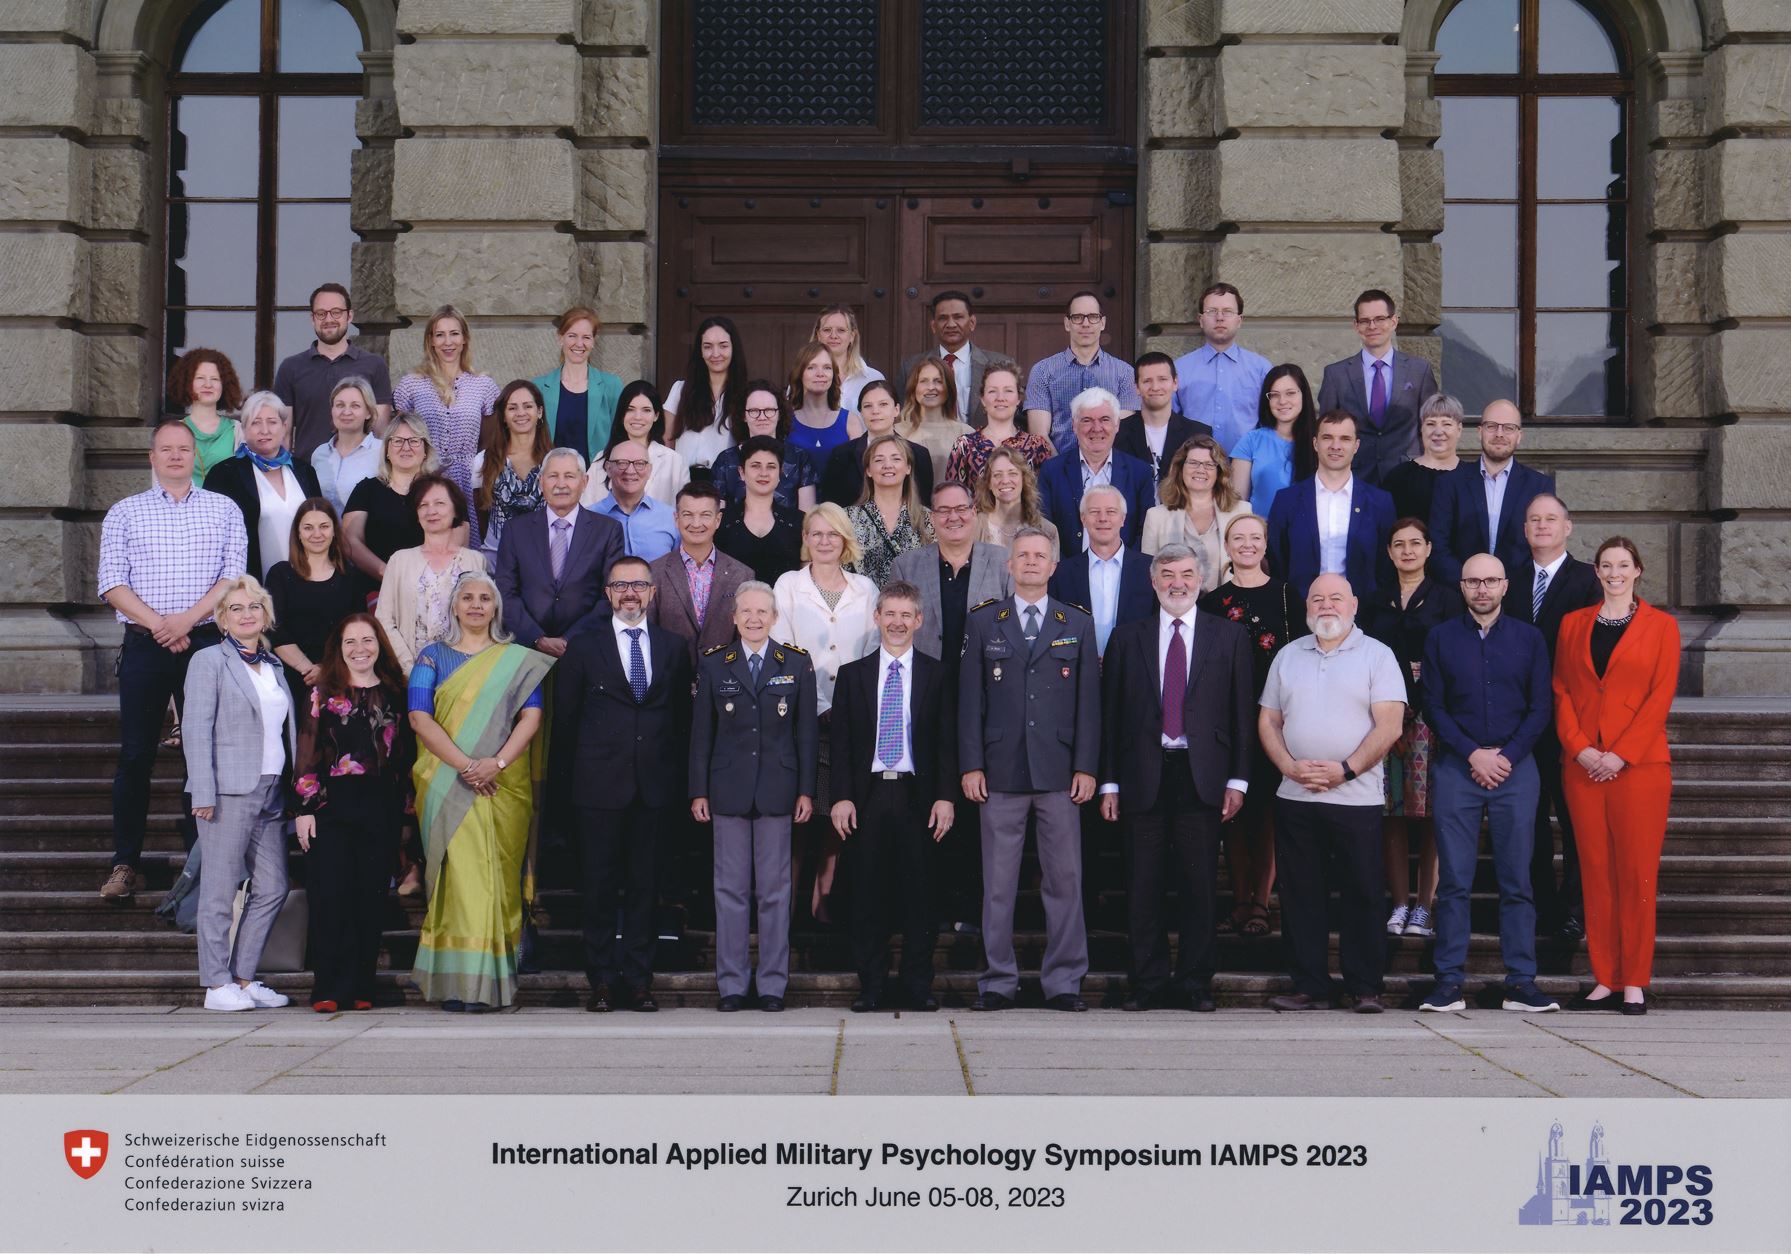 Group photo of IAMPS 2023